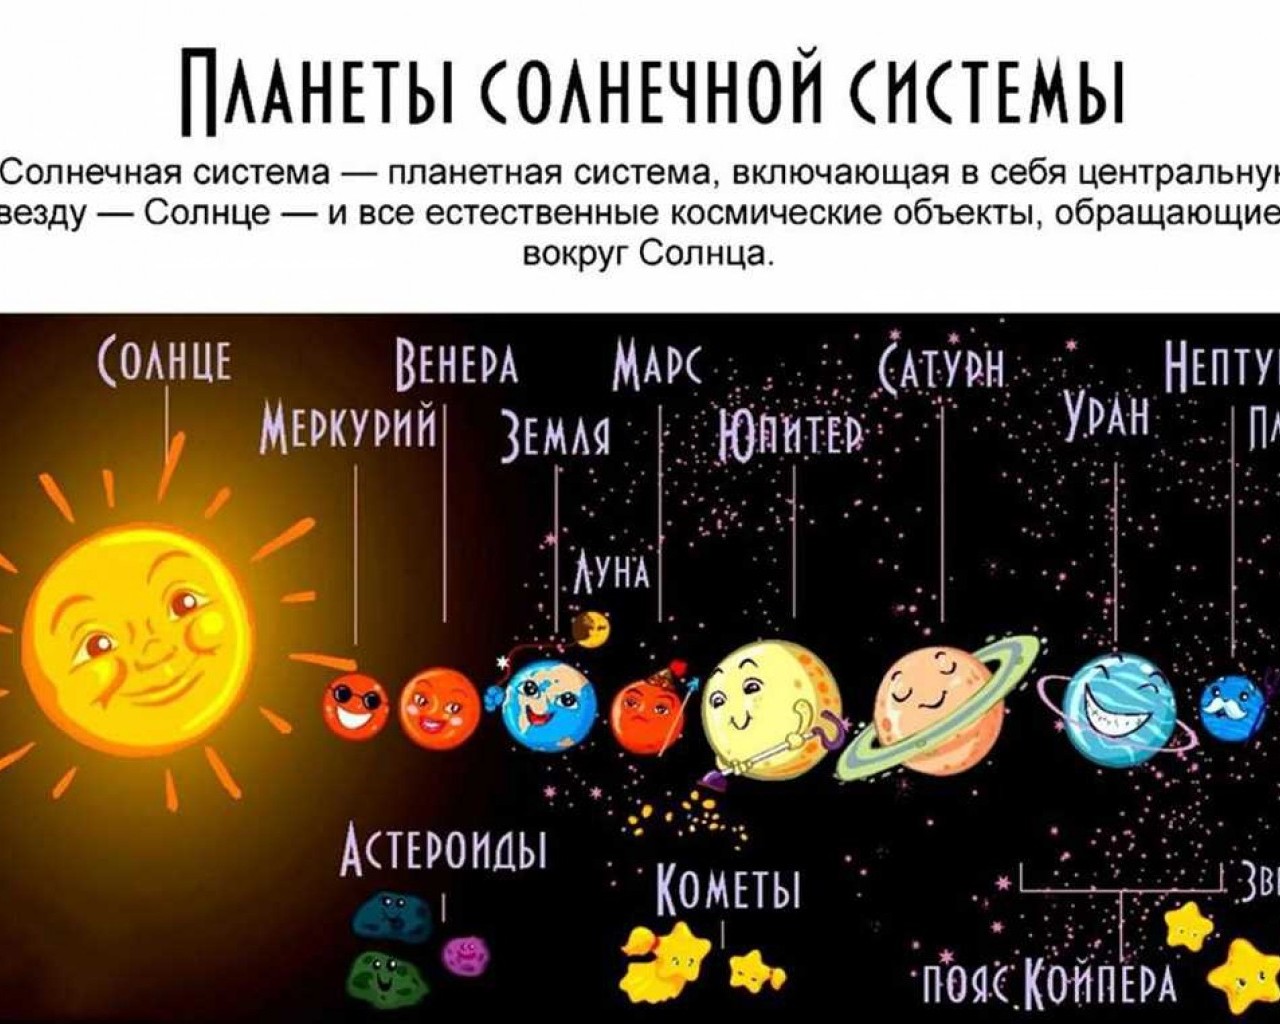 5 апреля планеты. Солнечная система с названиями планет. Солнечная система с названиями планет для детей. Девять планет солнечной системы. Солнечная система с названиями планет по порядку от солнца для детей.